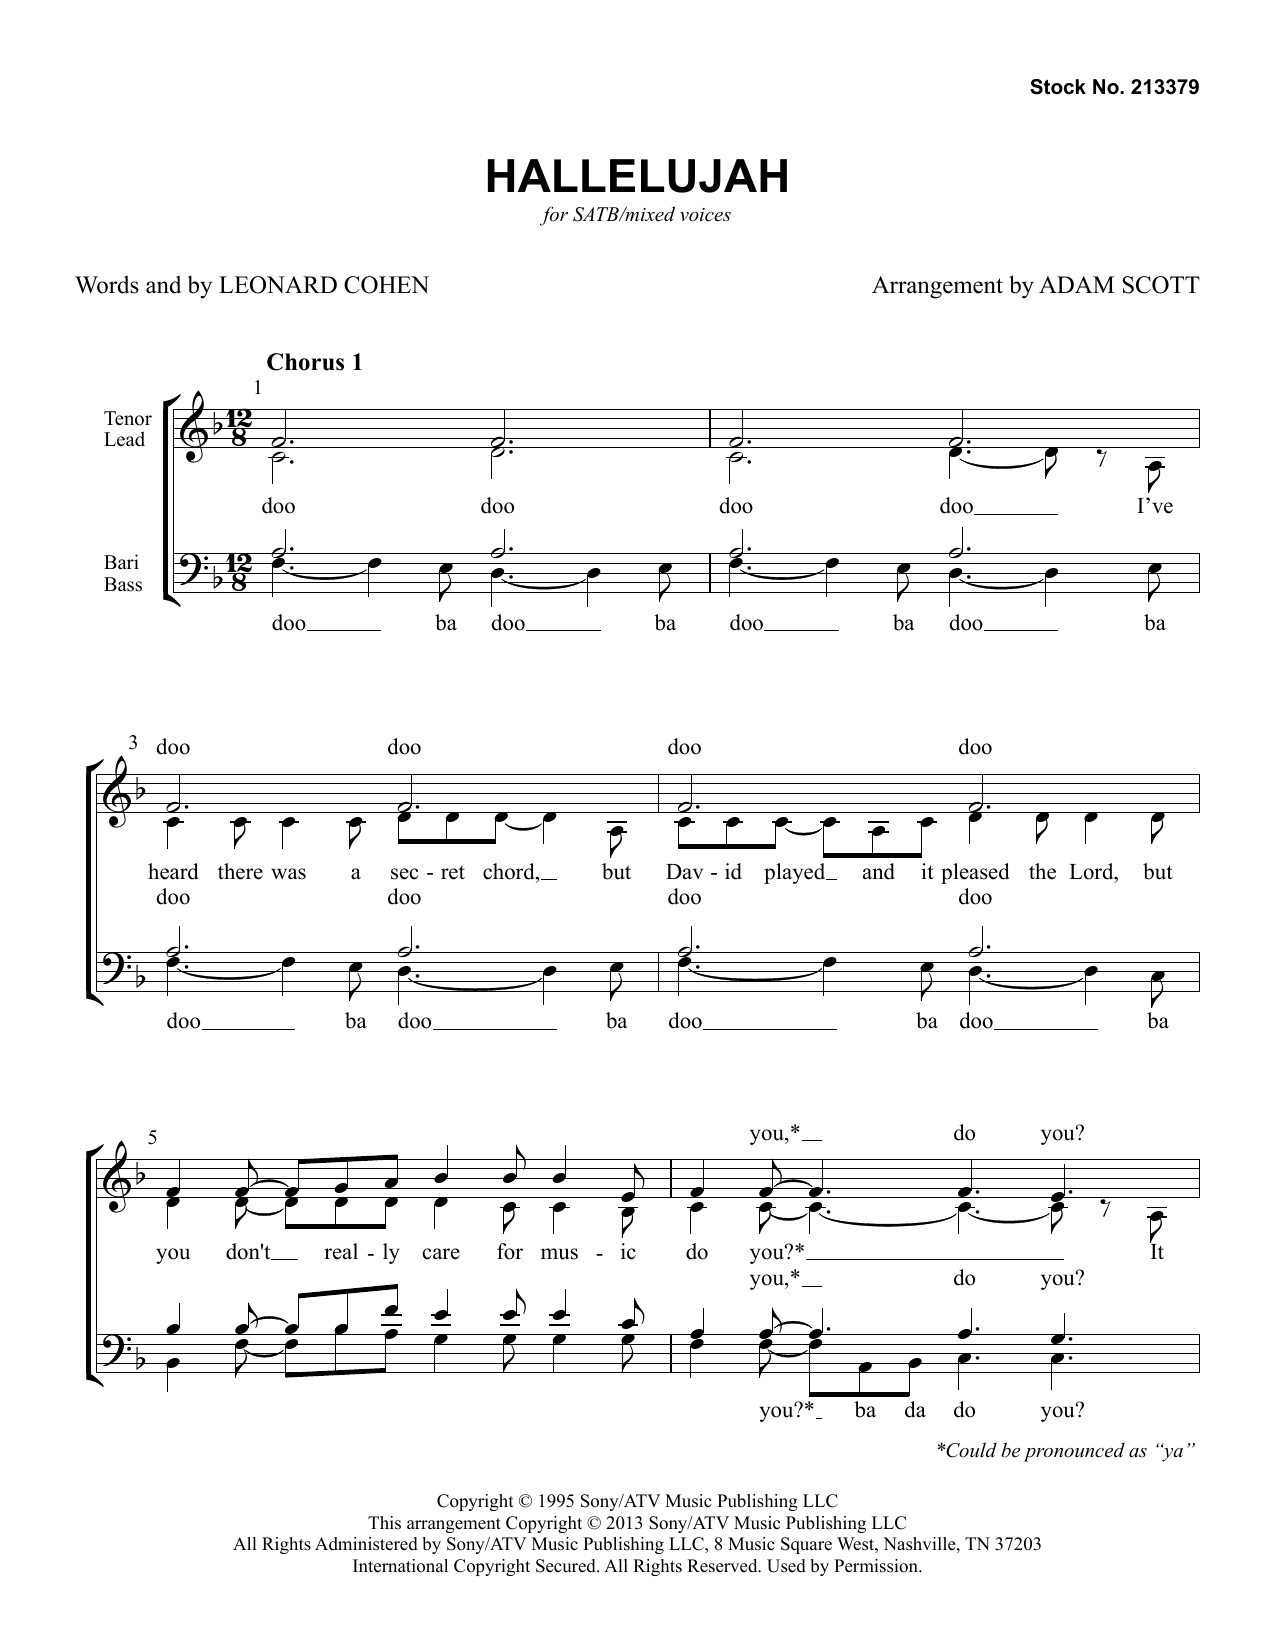 John Cale Hallelujah (arr. Adam Scott) Sheet Music Notes & Chords for TTBB Choir - Download or Print PDF